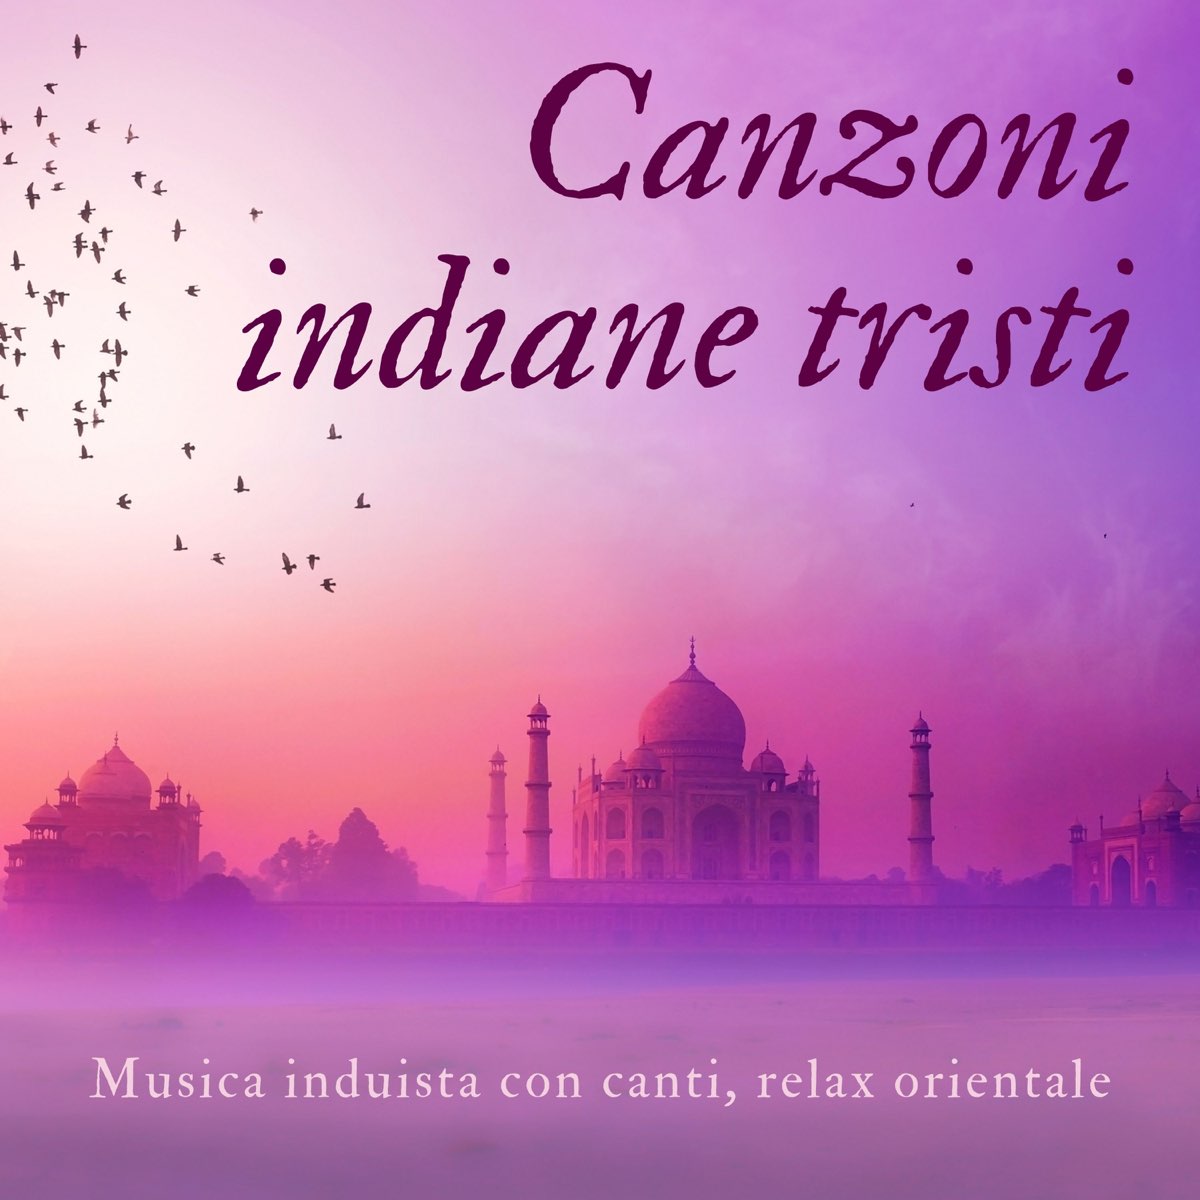 Canzoni indiane tristi - Musica induista con canti, relax orientale by  Hindi Kora on Apple Music